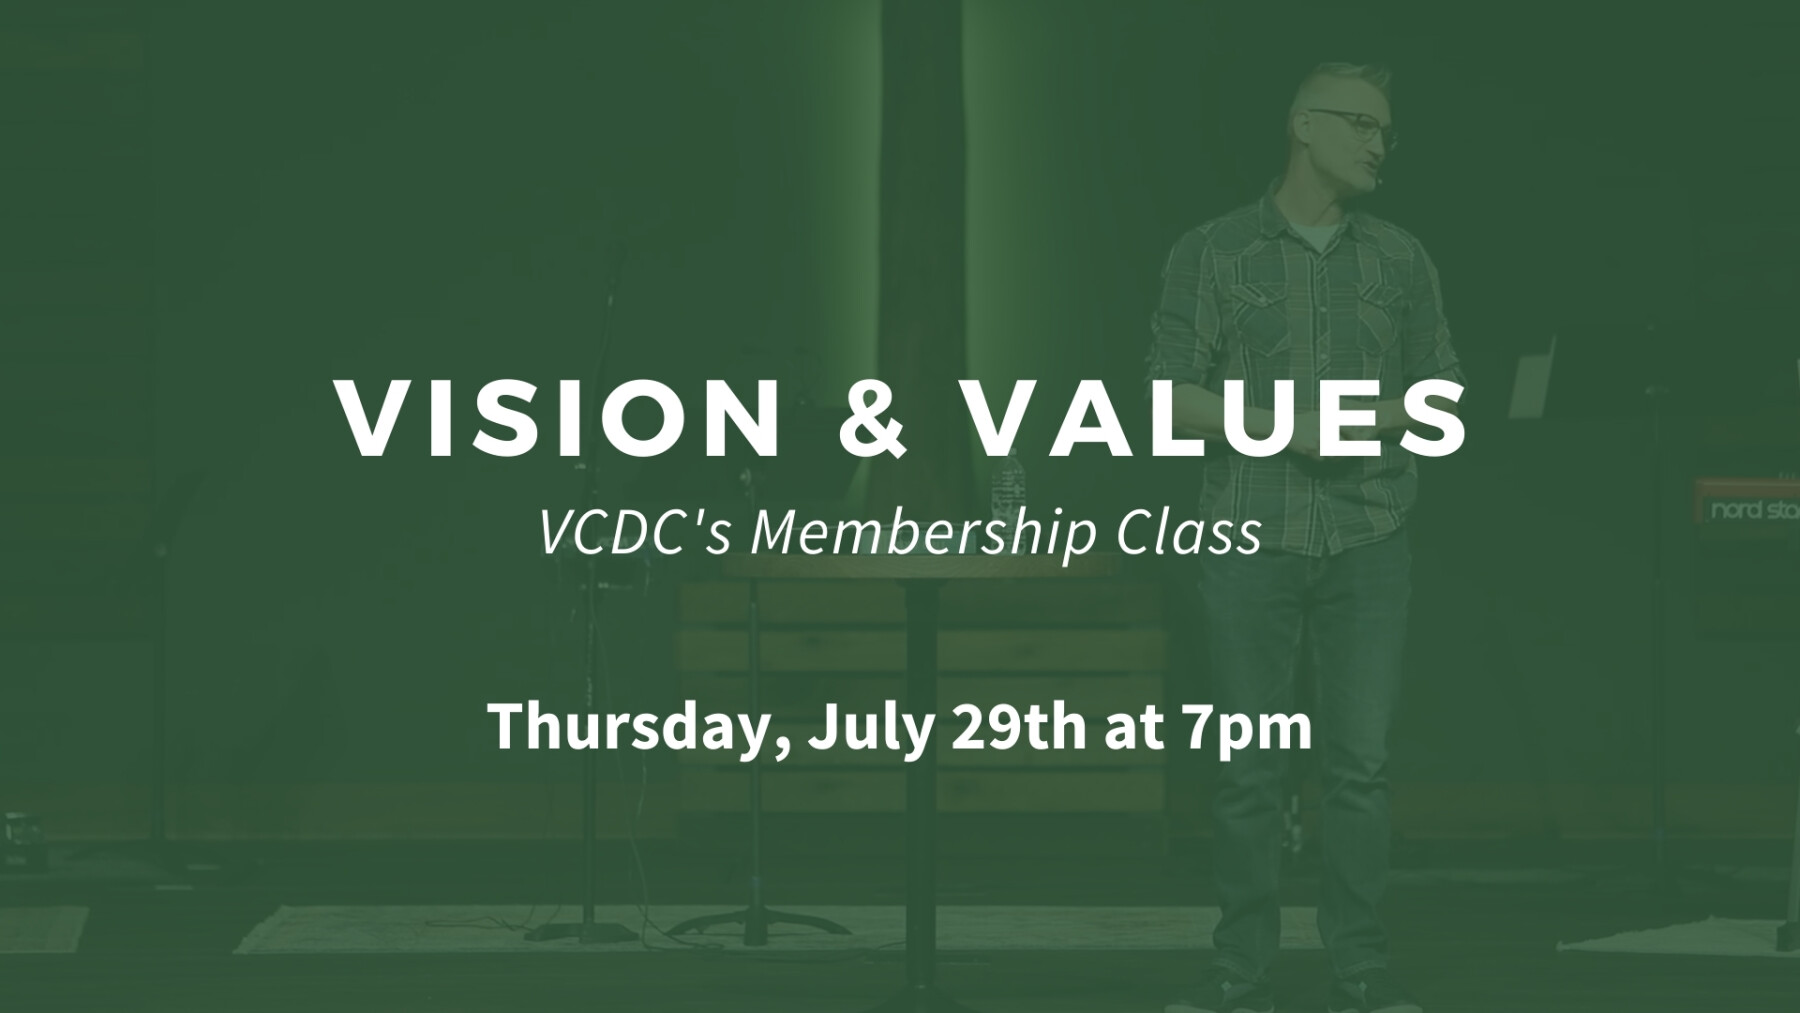 Vision & Values - Thursday, July 29th at 7pm